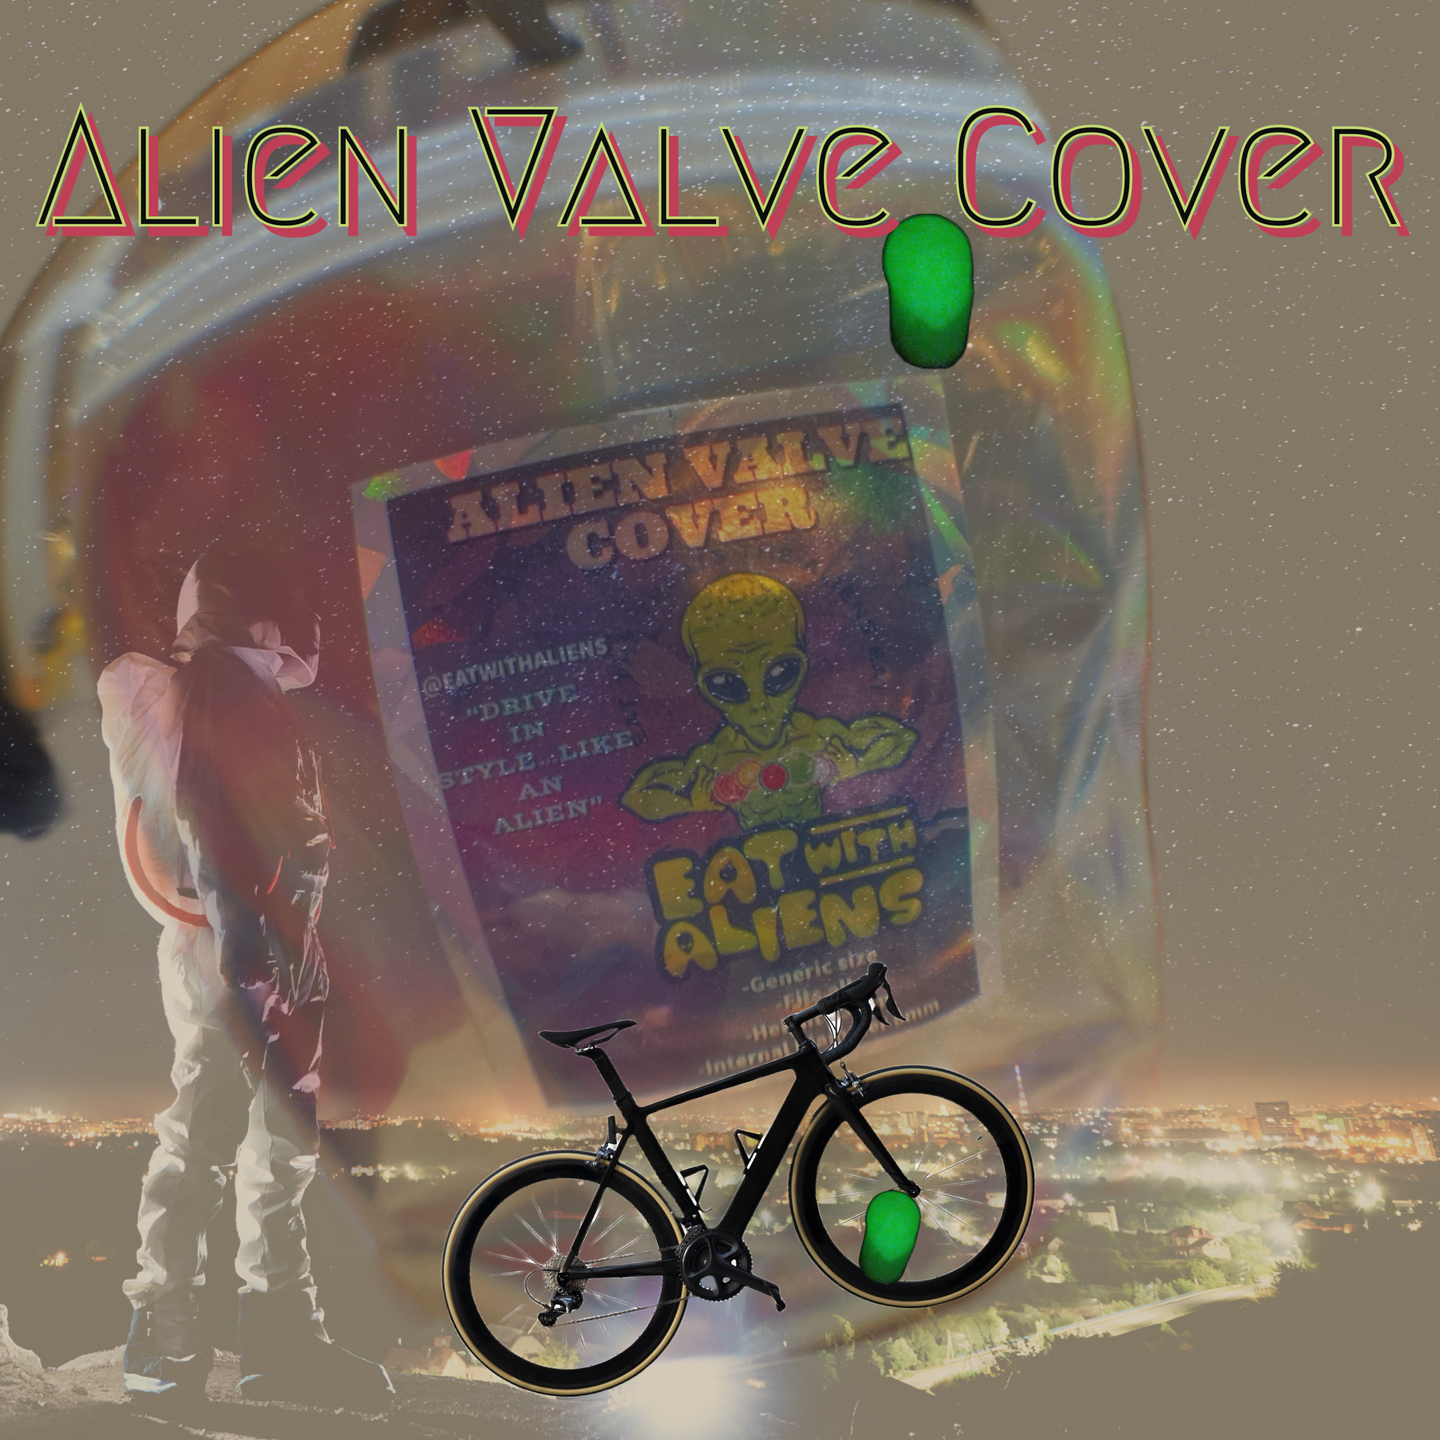 “Eat With Aliens” Alien Valve Cover